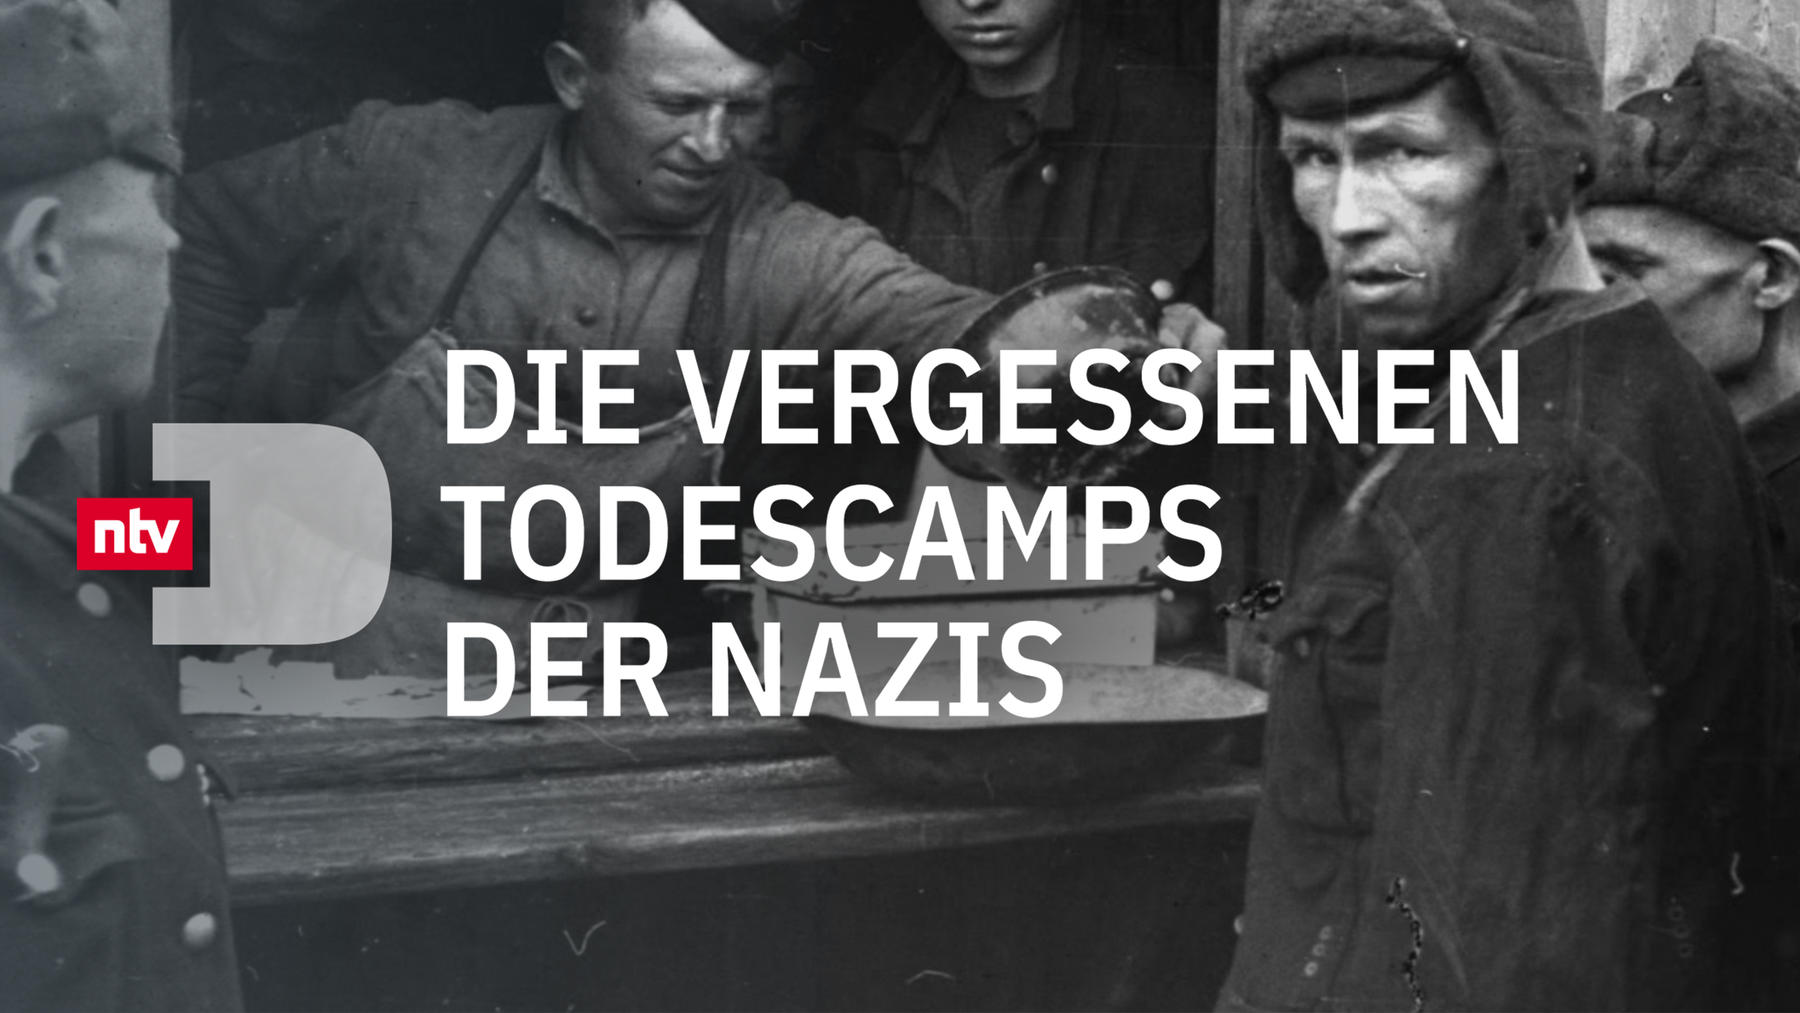 Die vergessenen Todescamps der Nazis